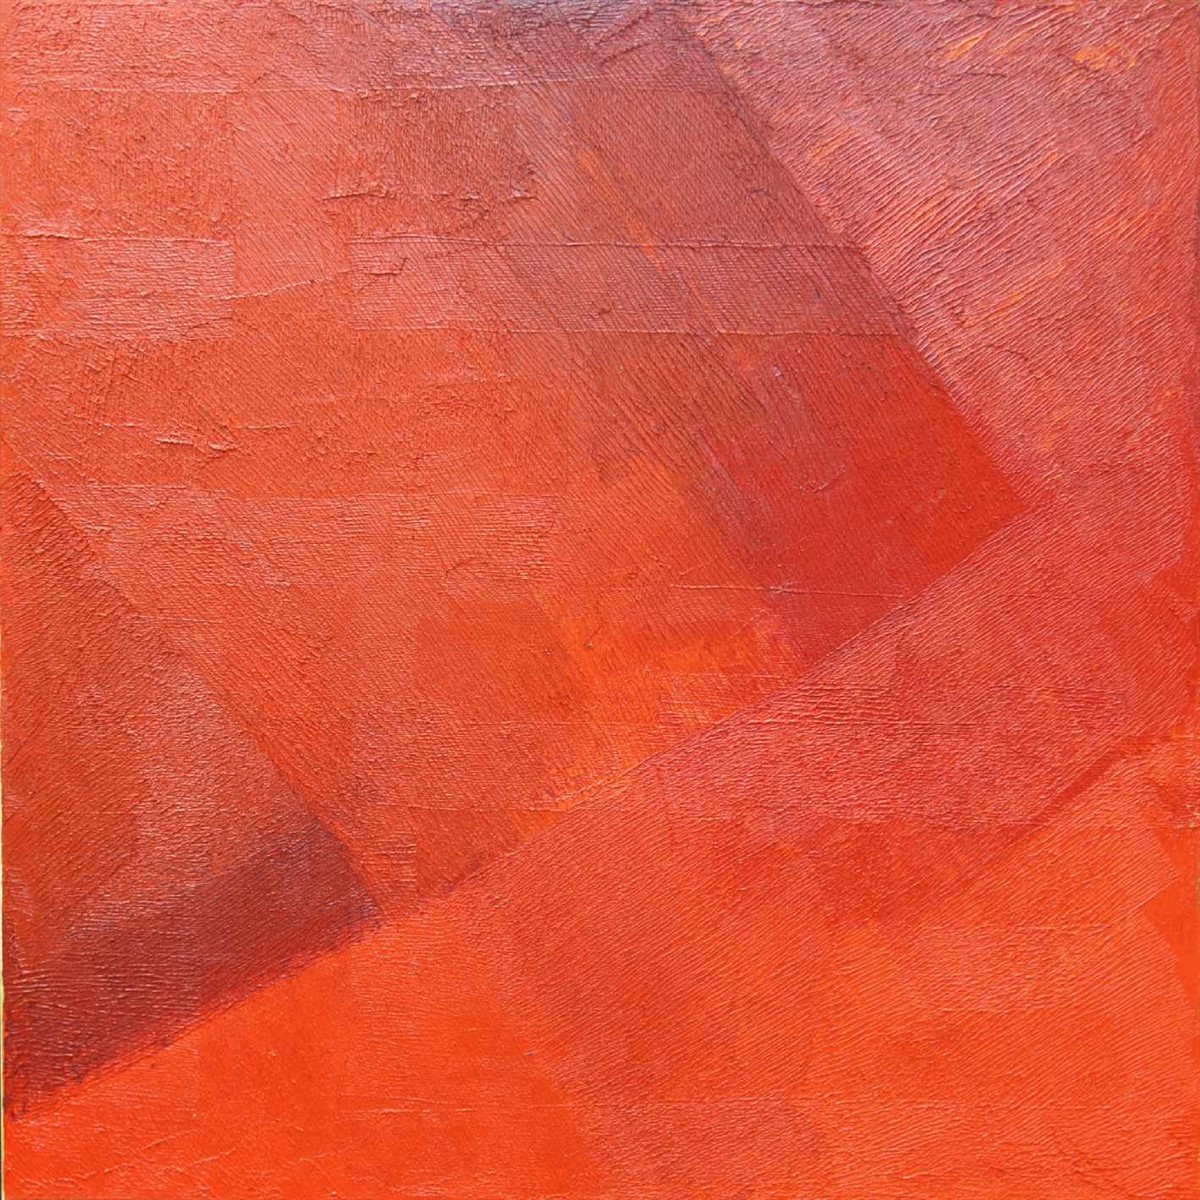 Helga Gendriesch, cm 120x120, untitled, 2020, oil, 20L06-01